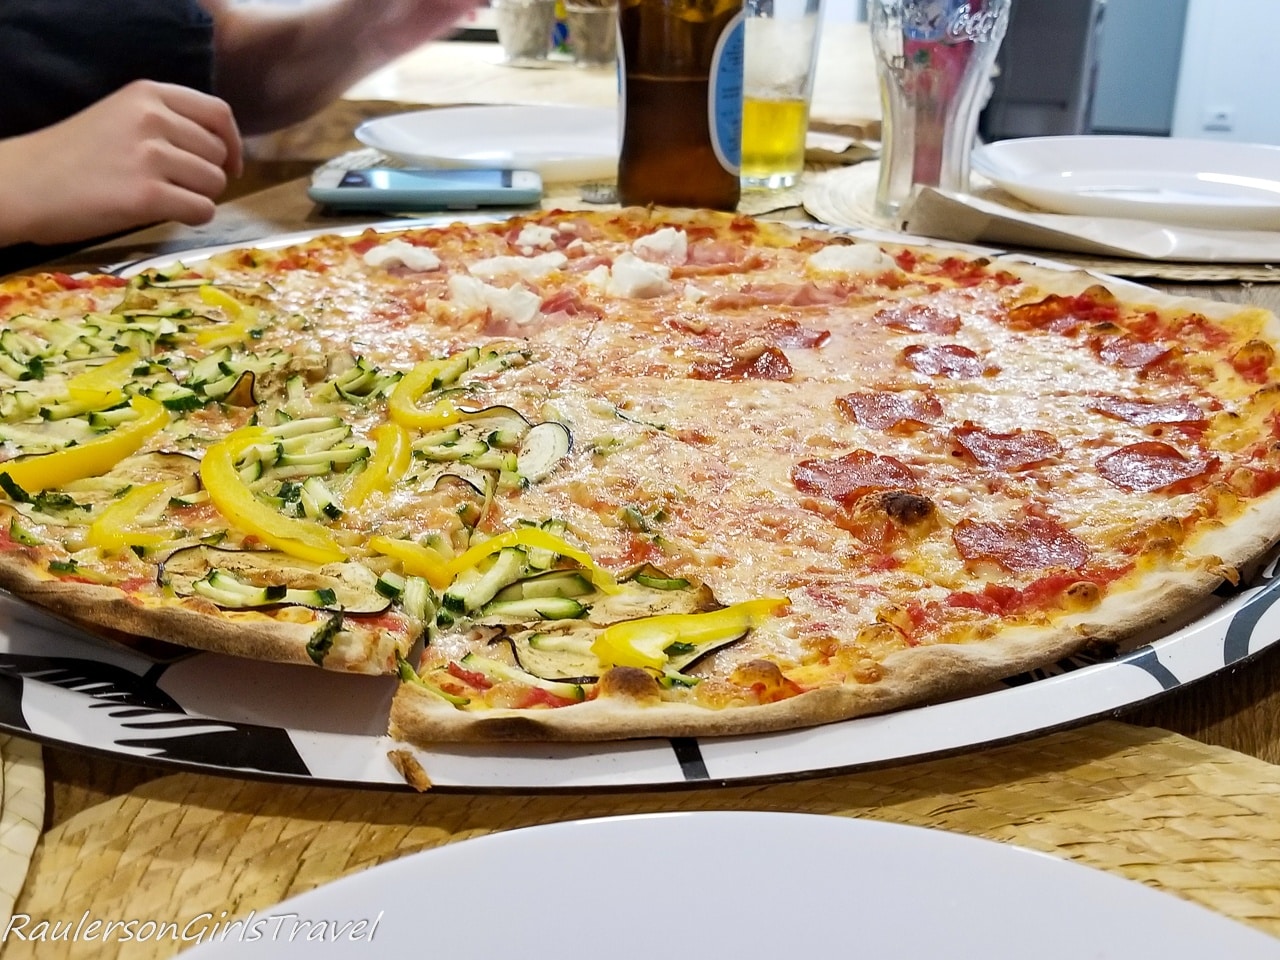 Pizza at #pizzaroad